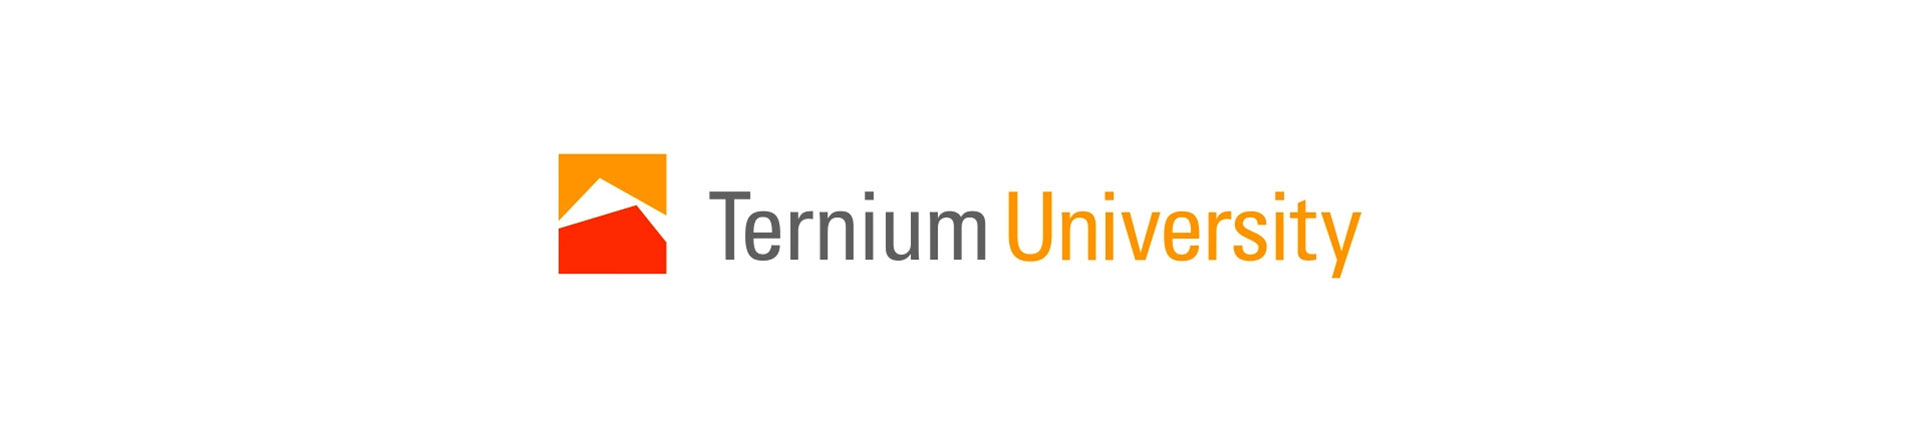 Ternium University - Showcase